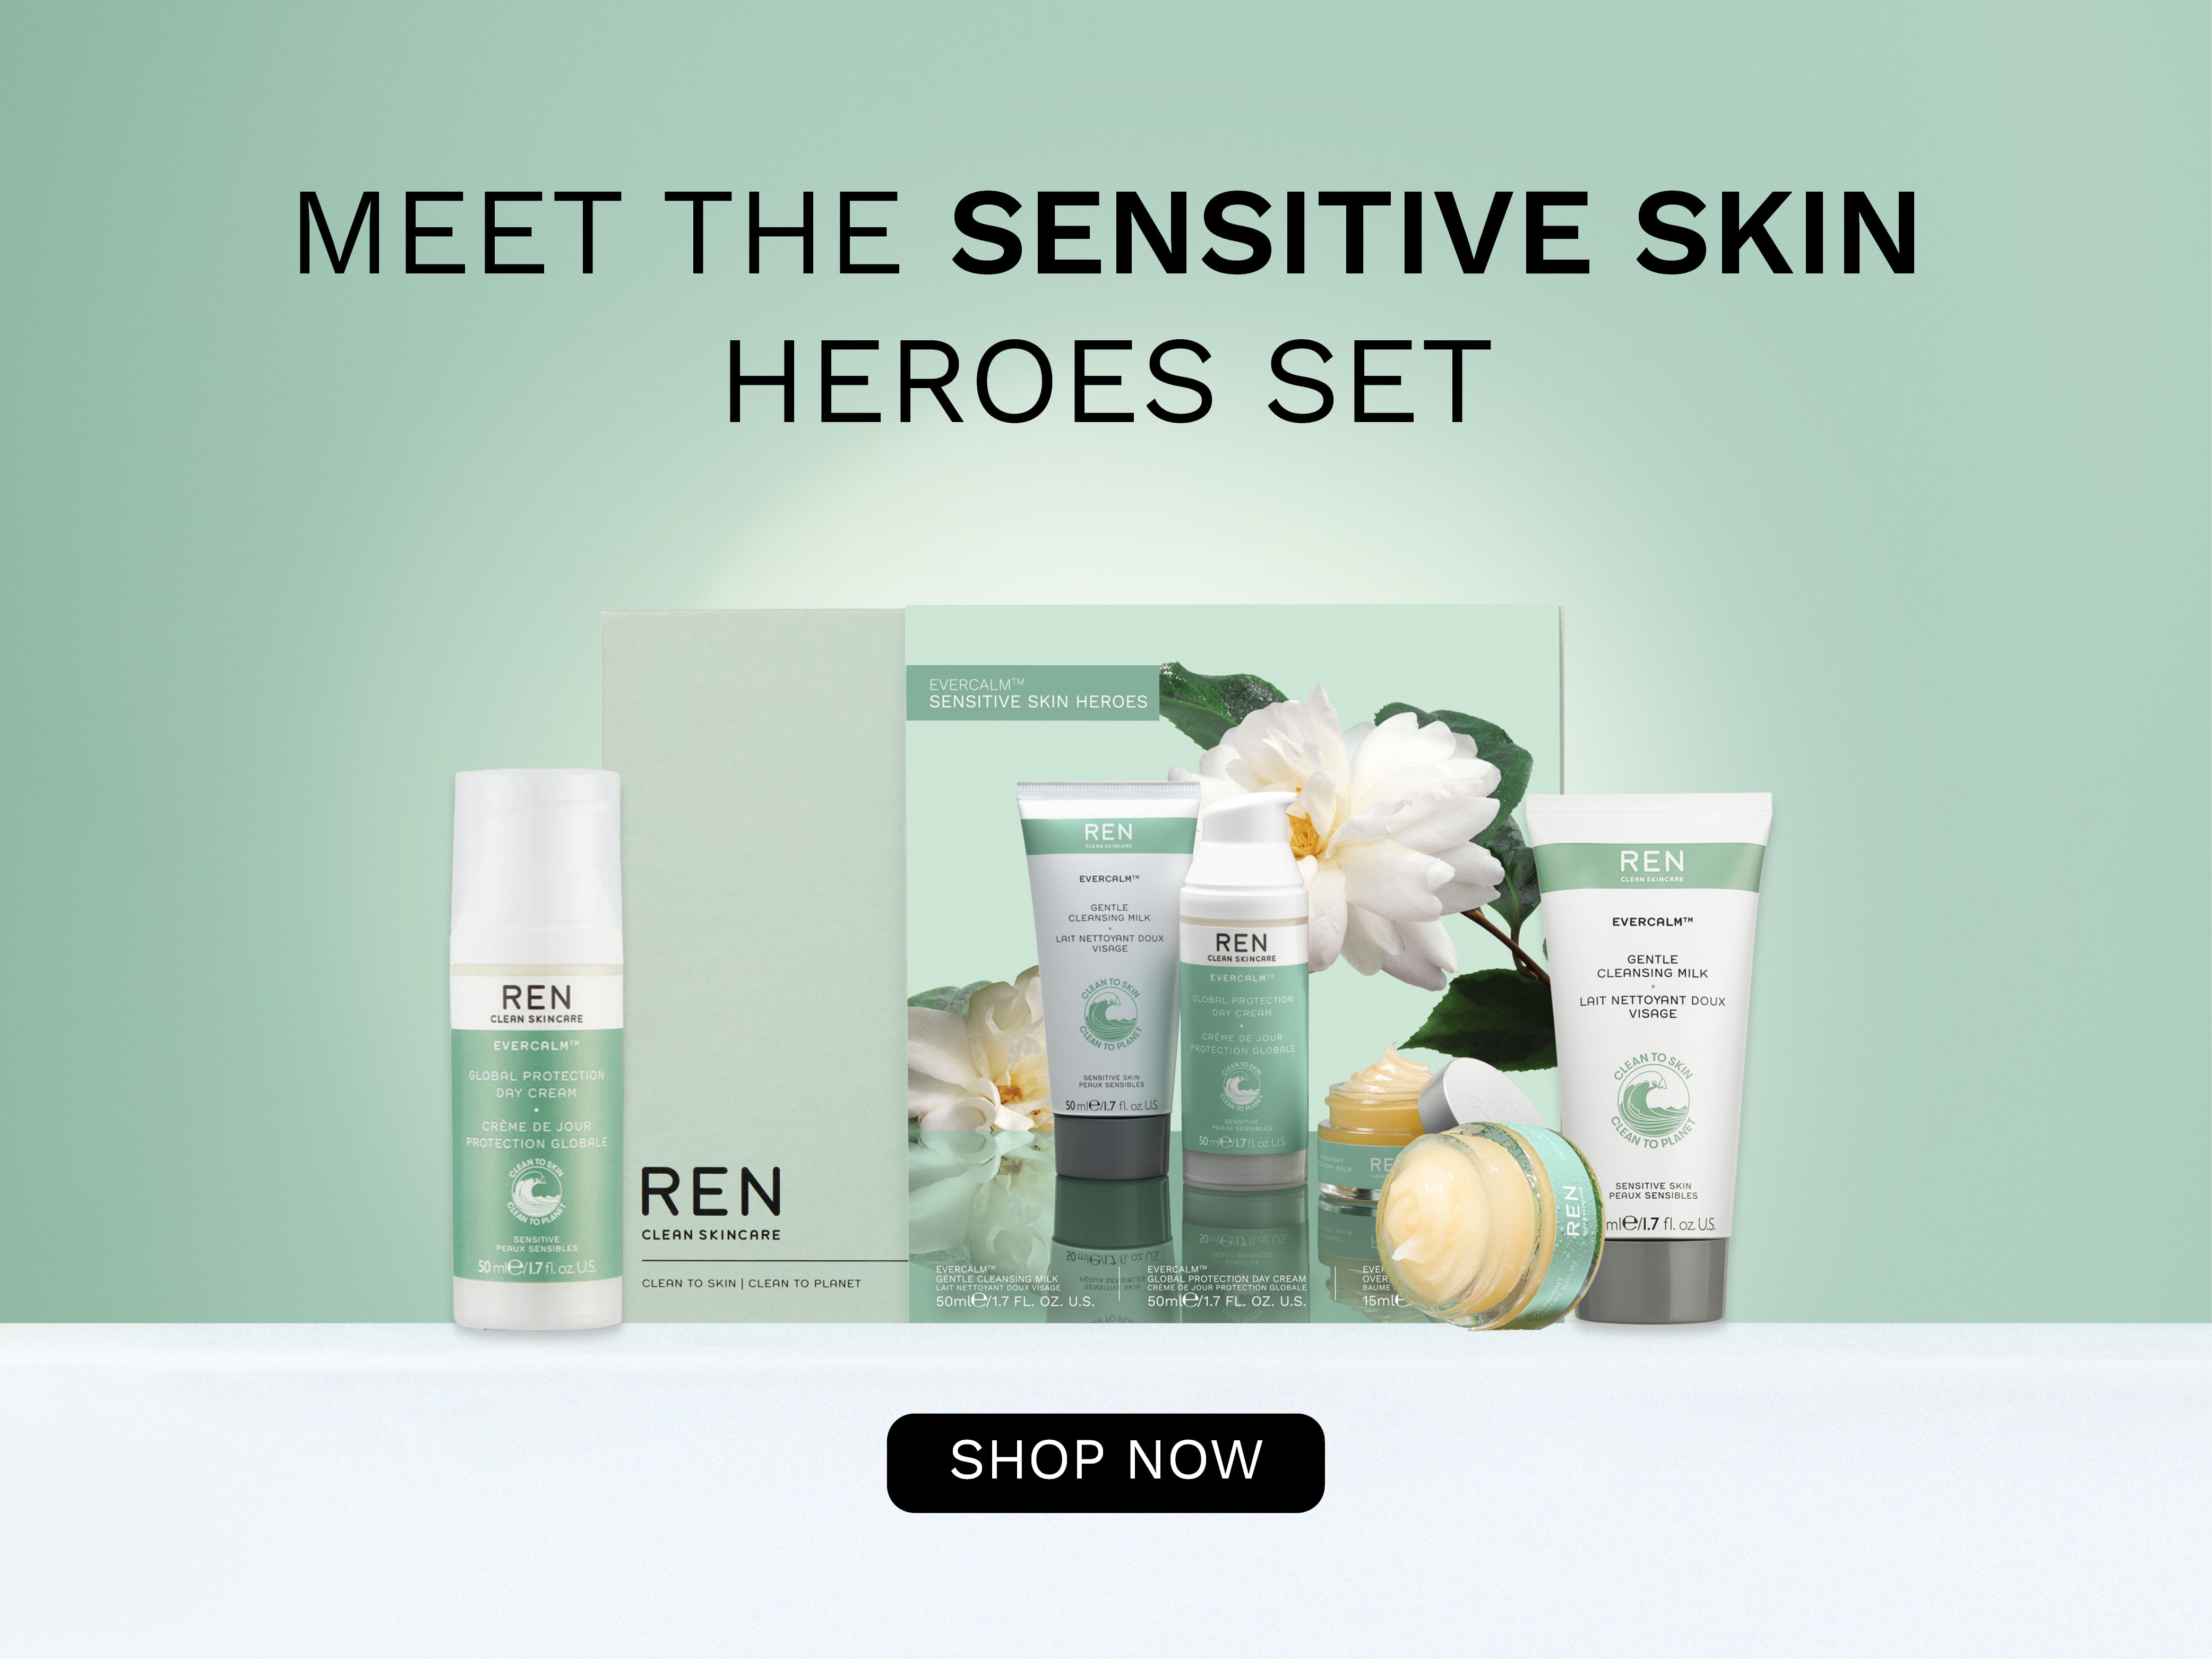 Meet the sensitive skin heroes set. Shop now. 